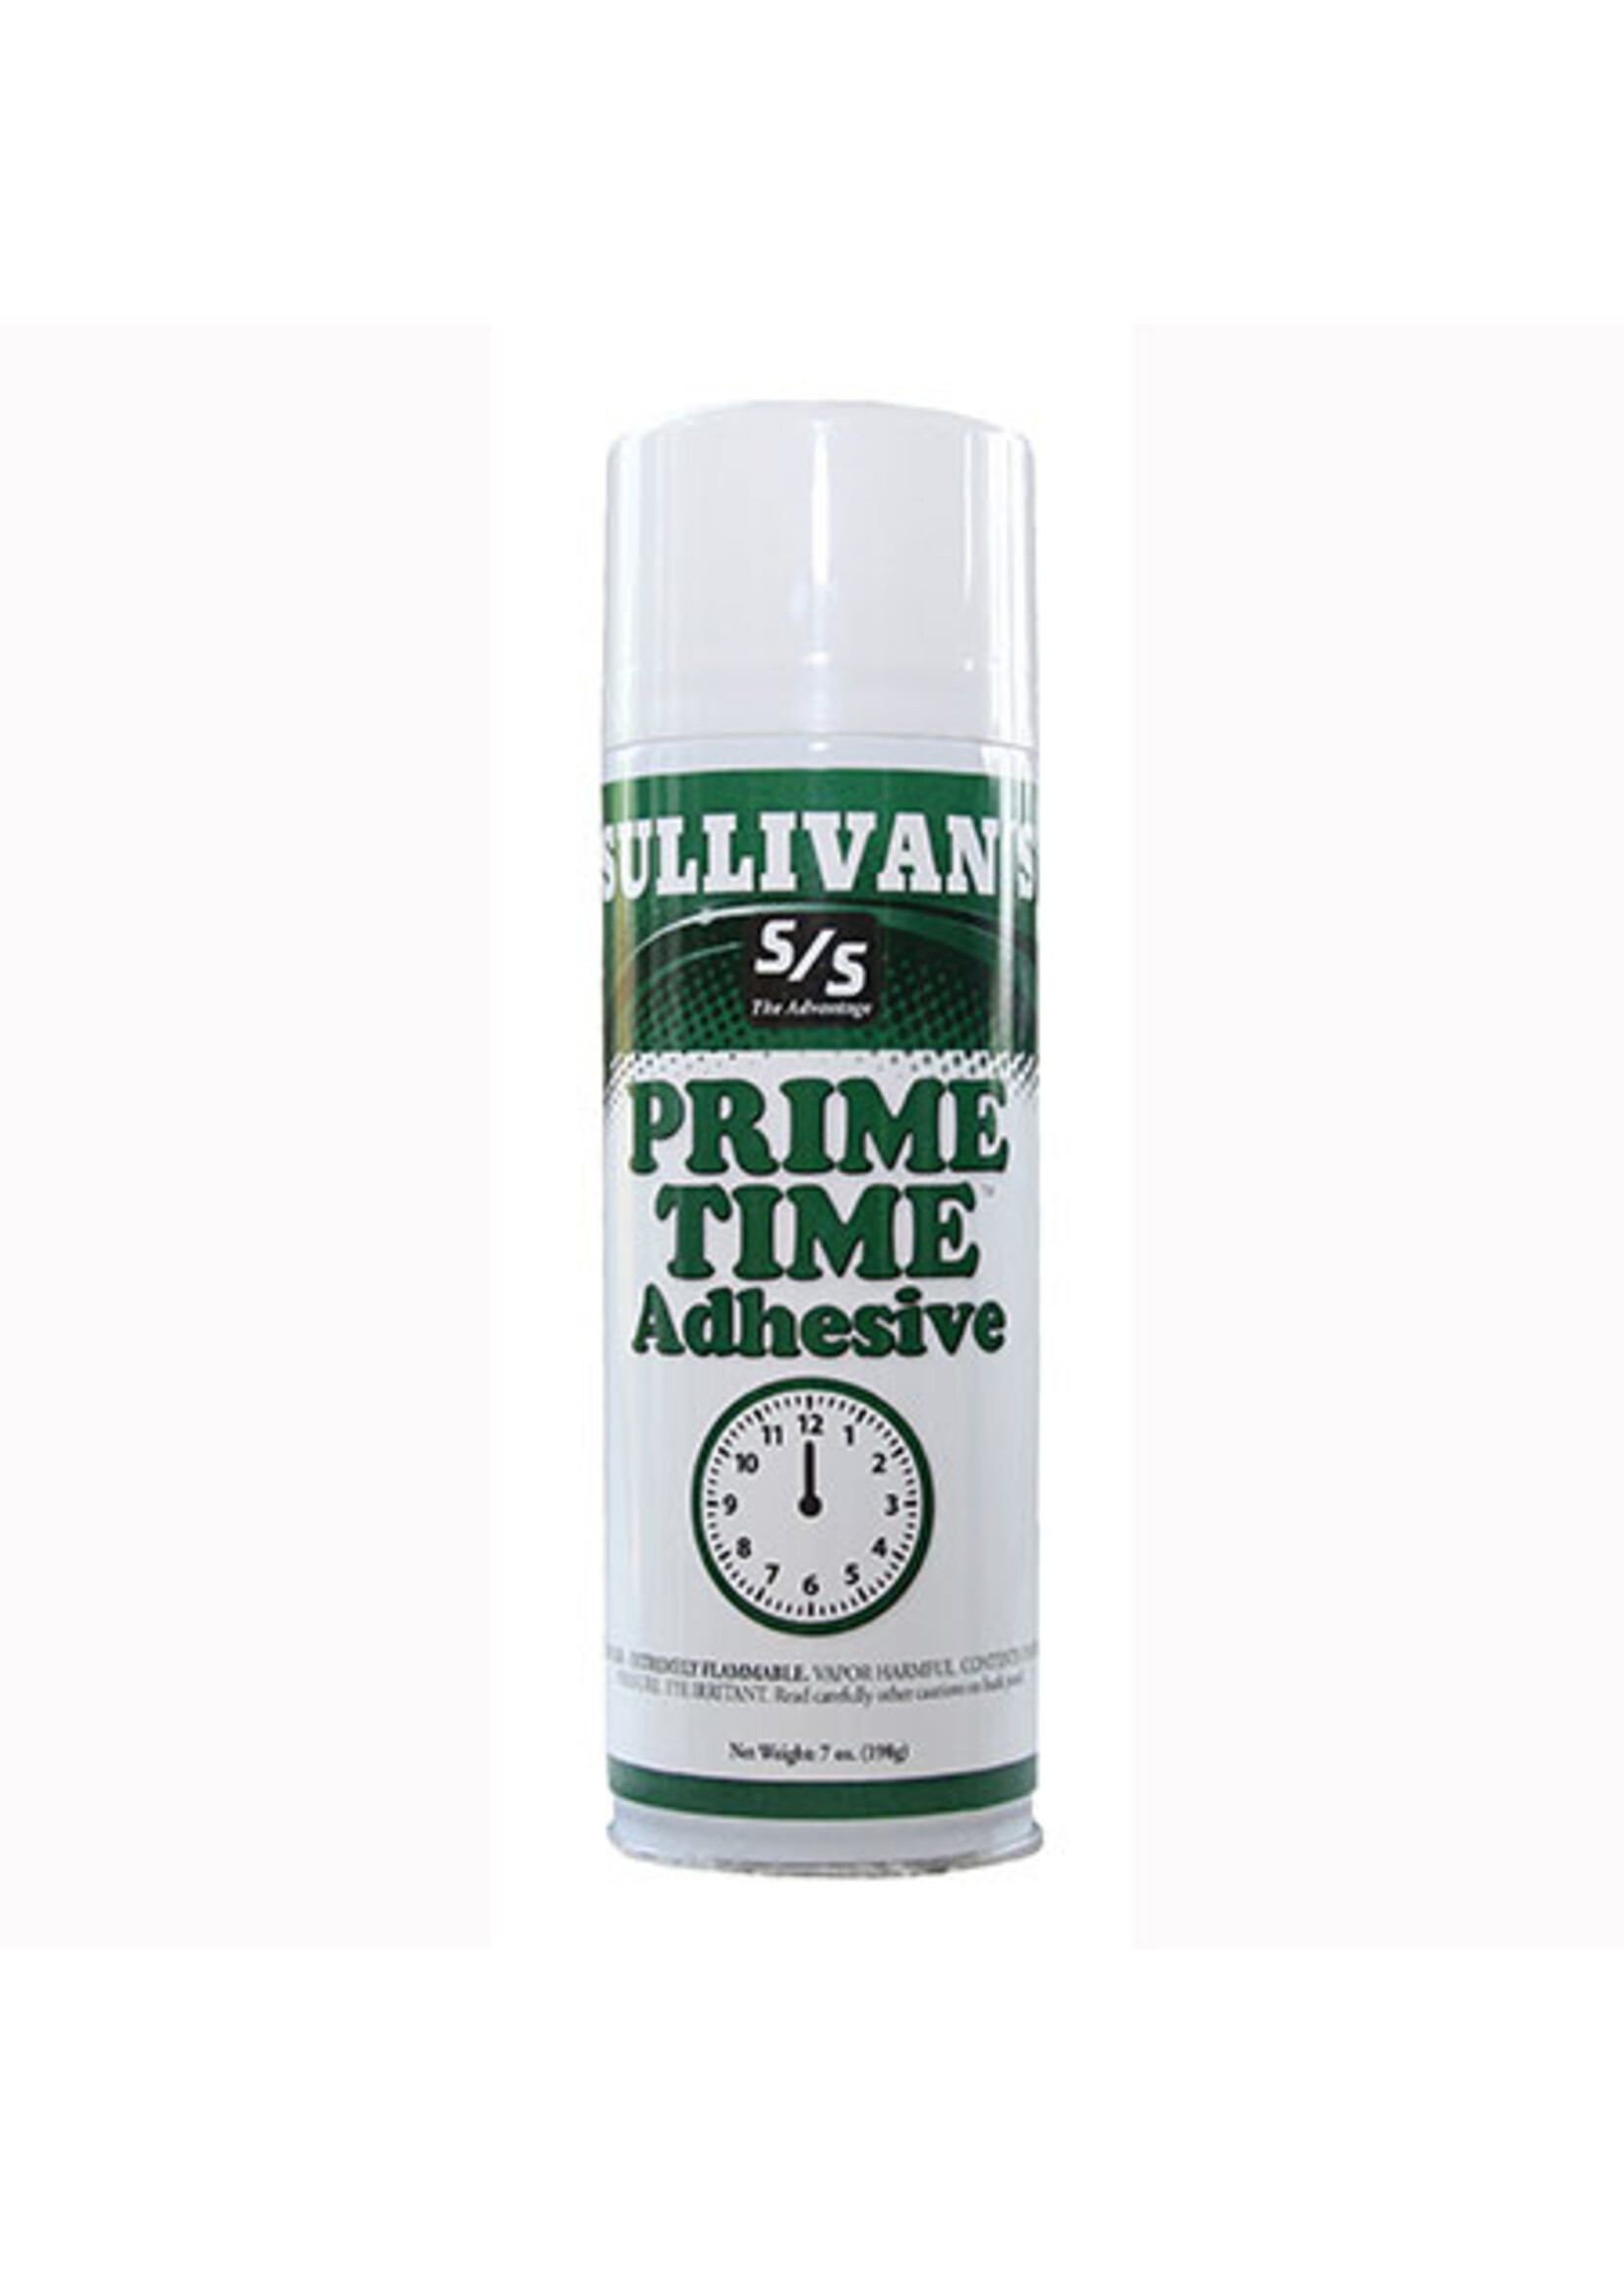 Sullivan Supply Sullivans Prime Time Adhesive 12oz Case